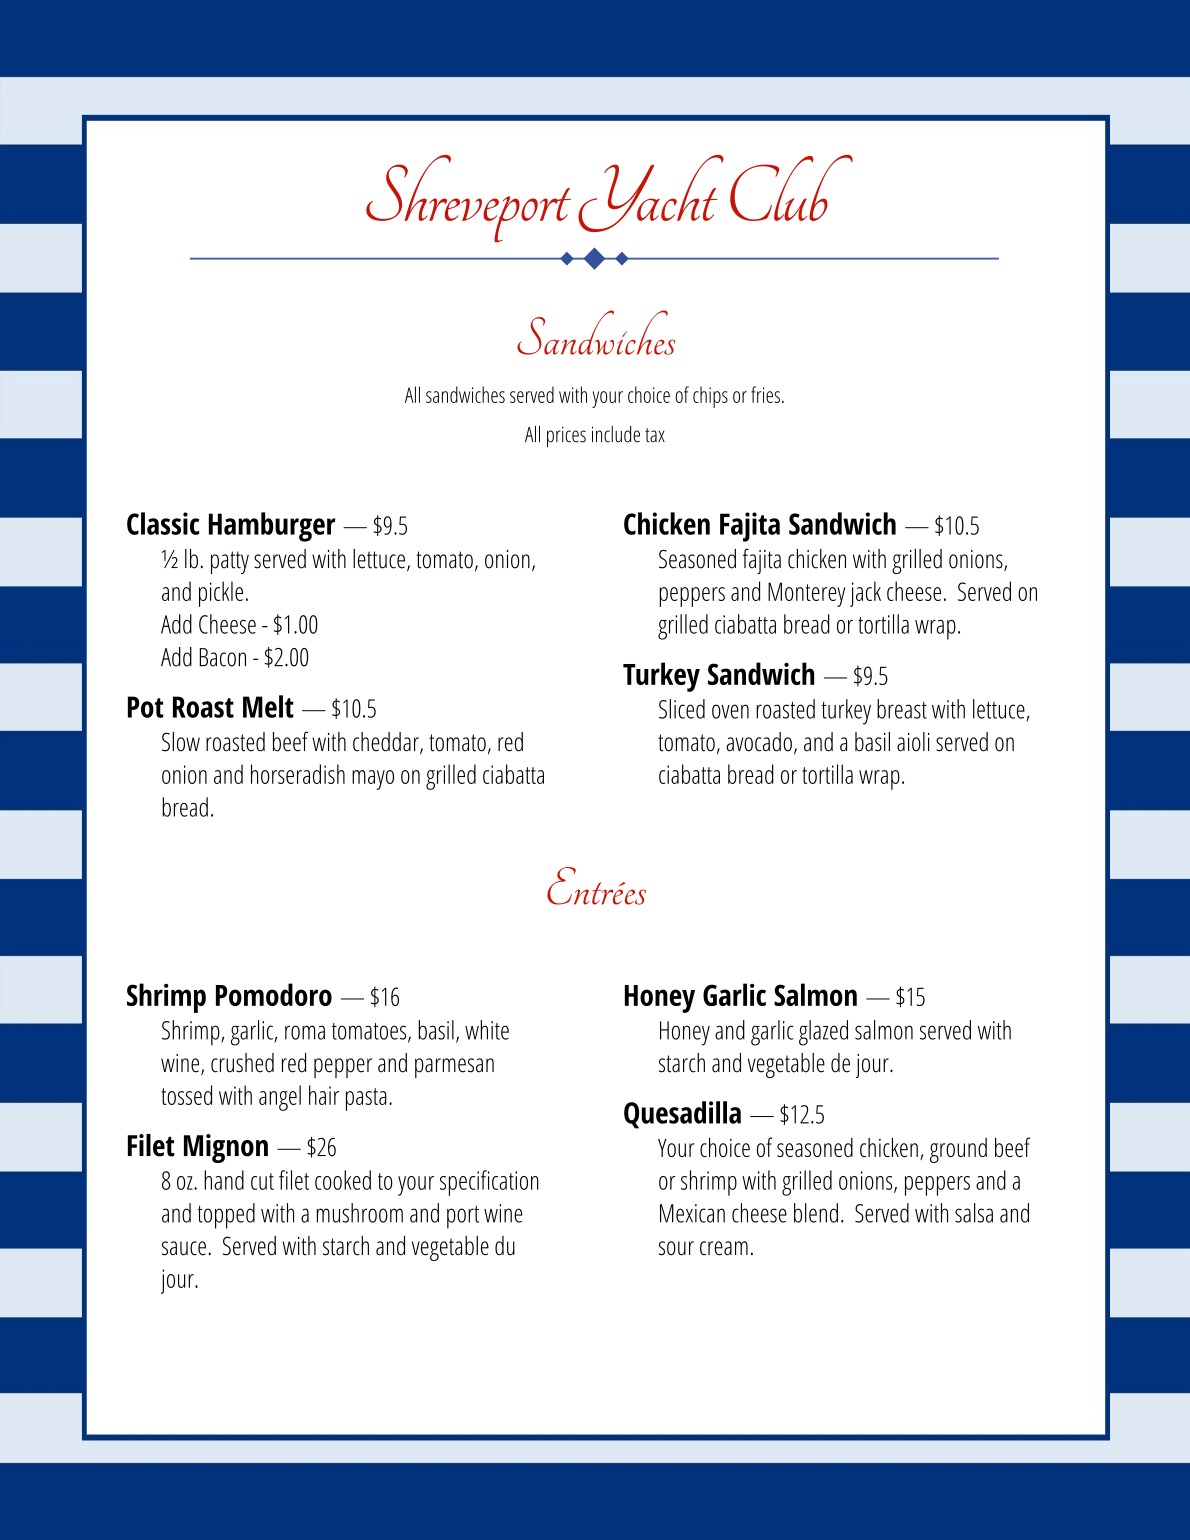 south shore yacht club menu